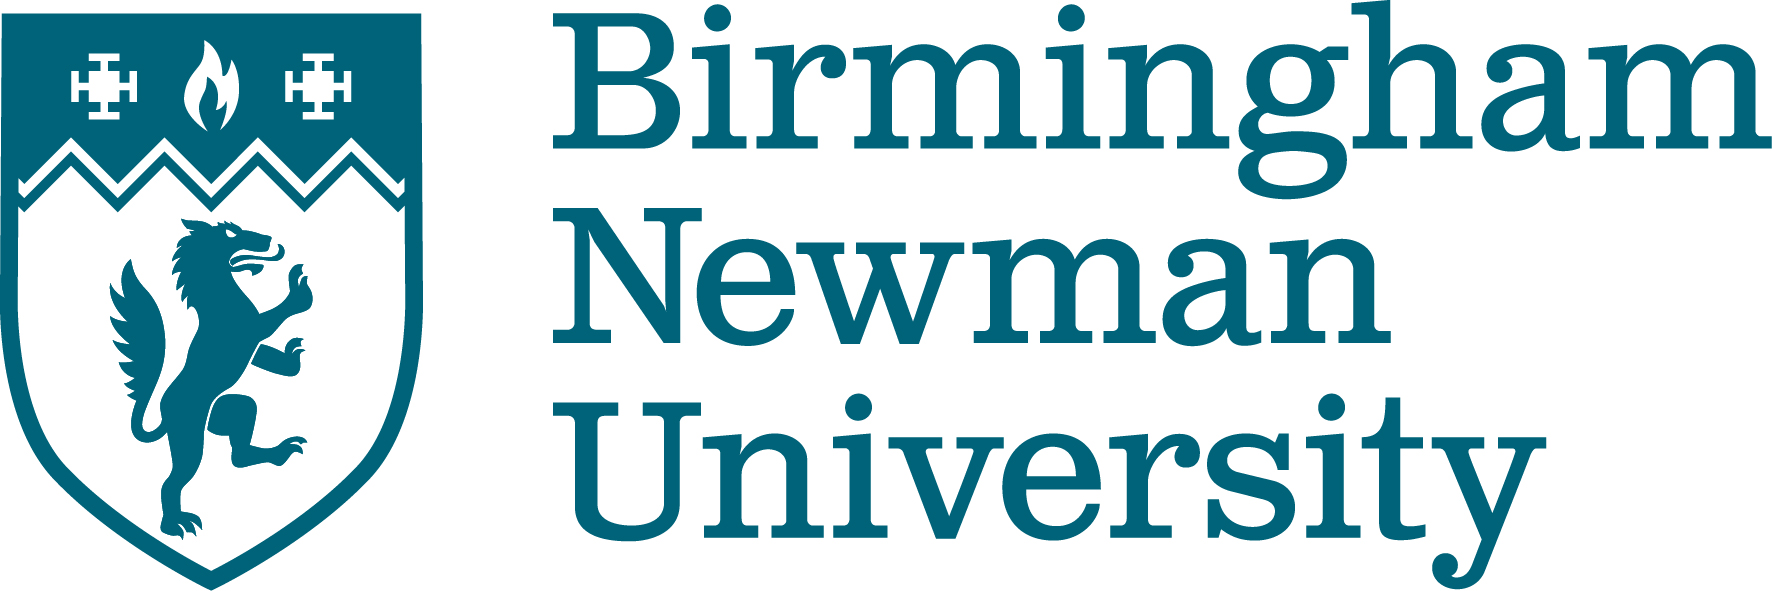 Birmingham Newman University logo